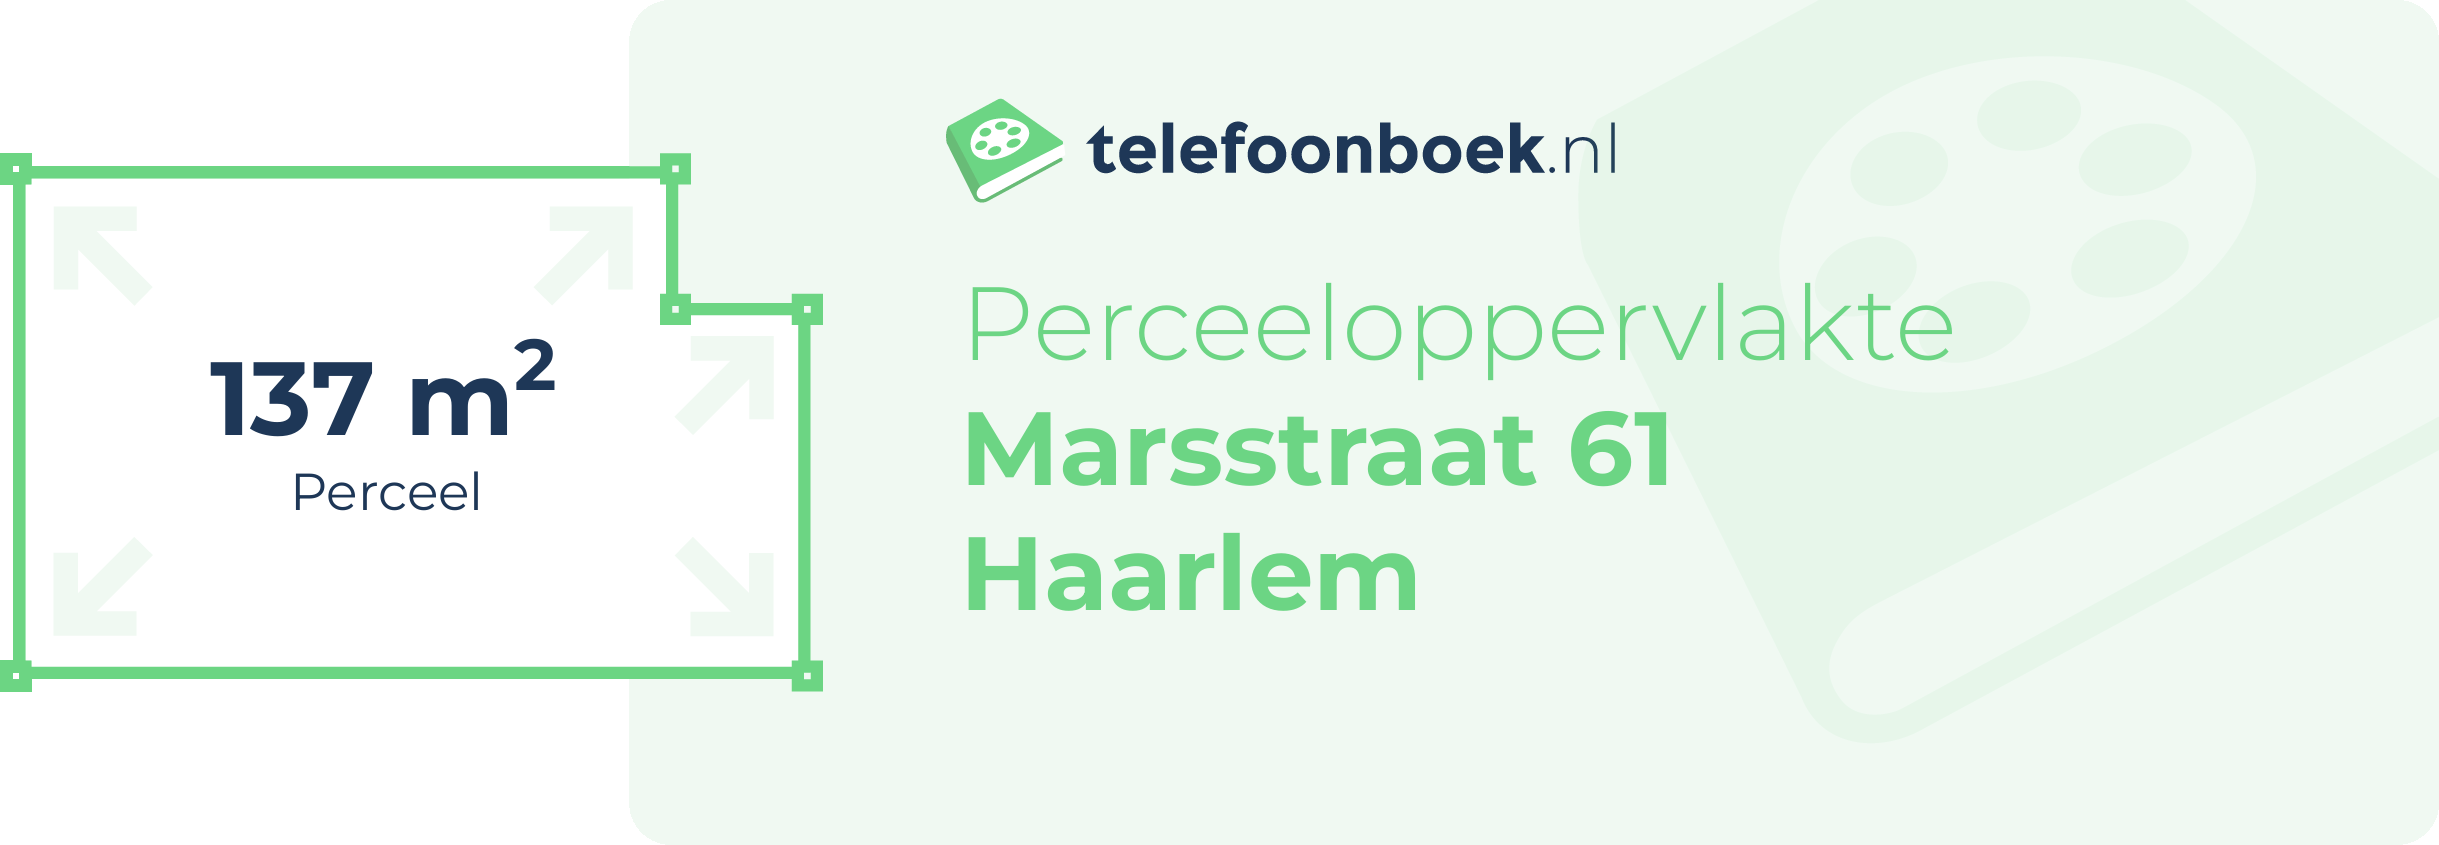 Perceeloppervlakte Marsstraat 61 Haarlem